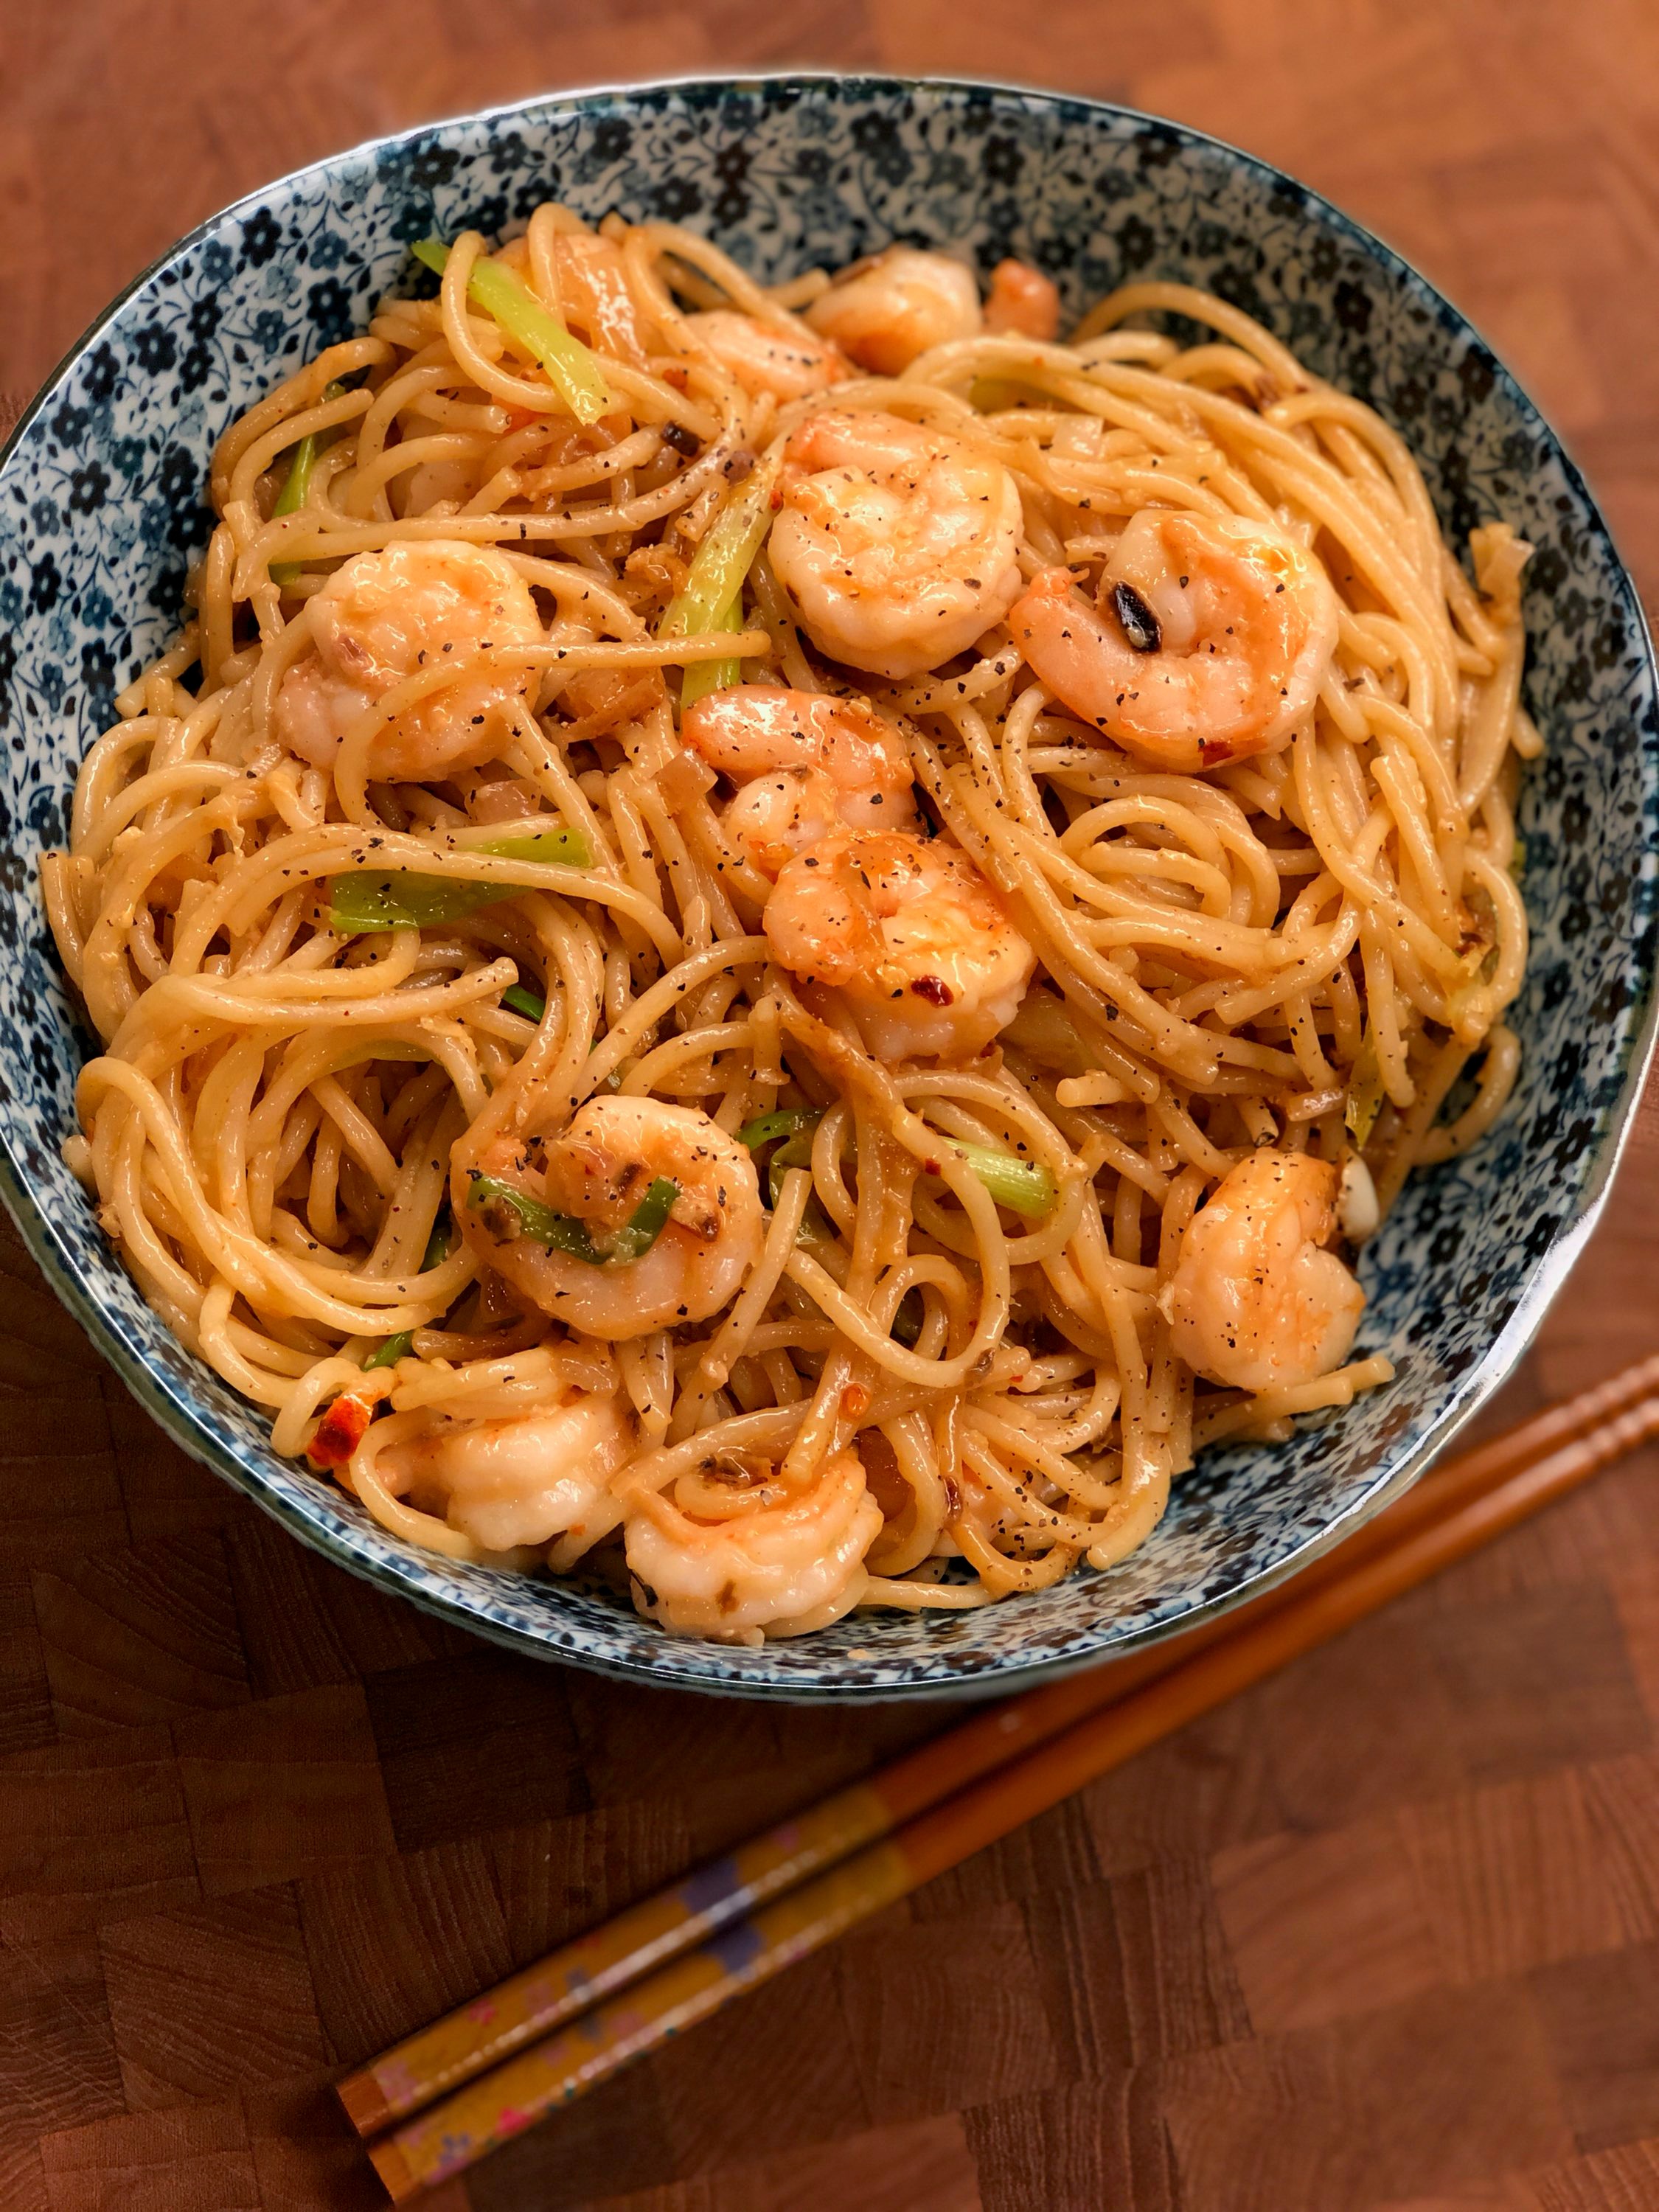 Shrimp and Noodles with Chili Crisp Sauce